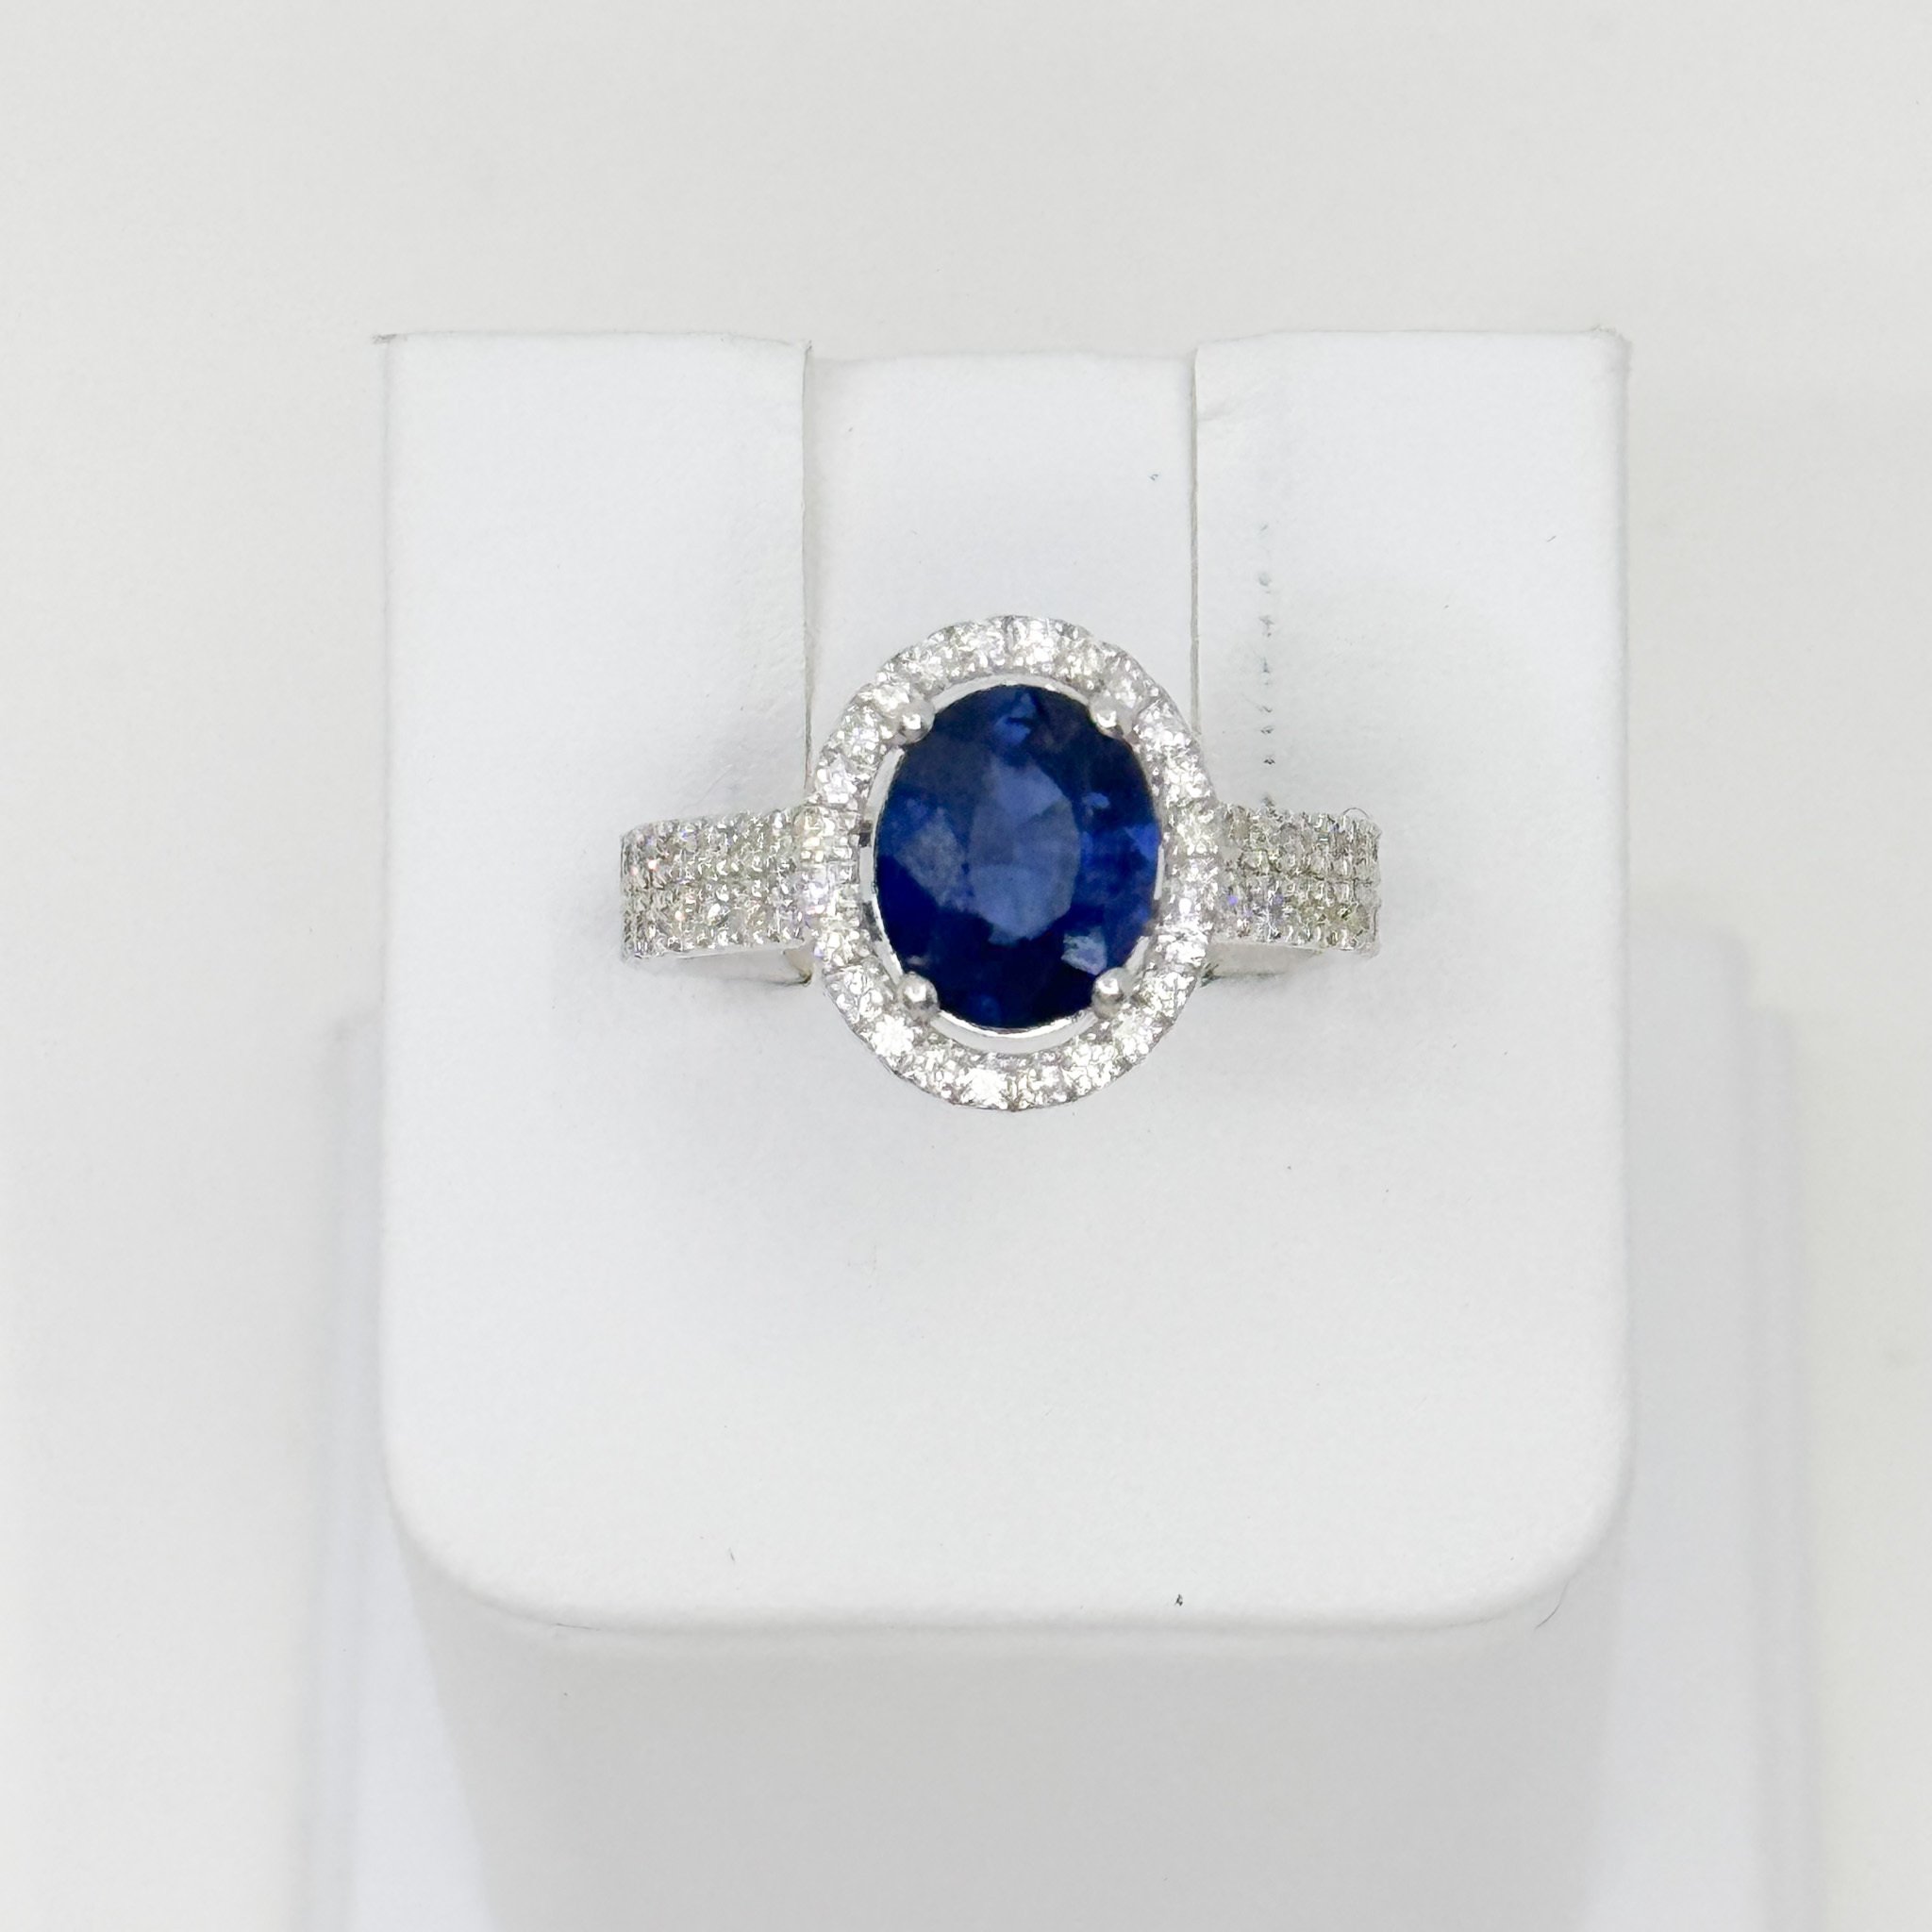 Diamond and Sapphire ring set in 14kw, 2.26ct sapphire, 0.74ct diamond